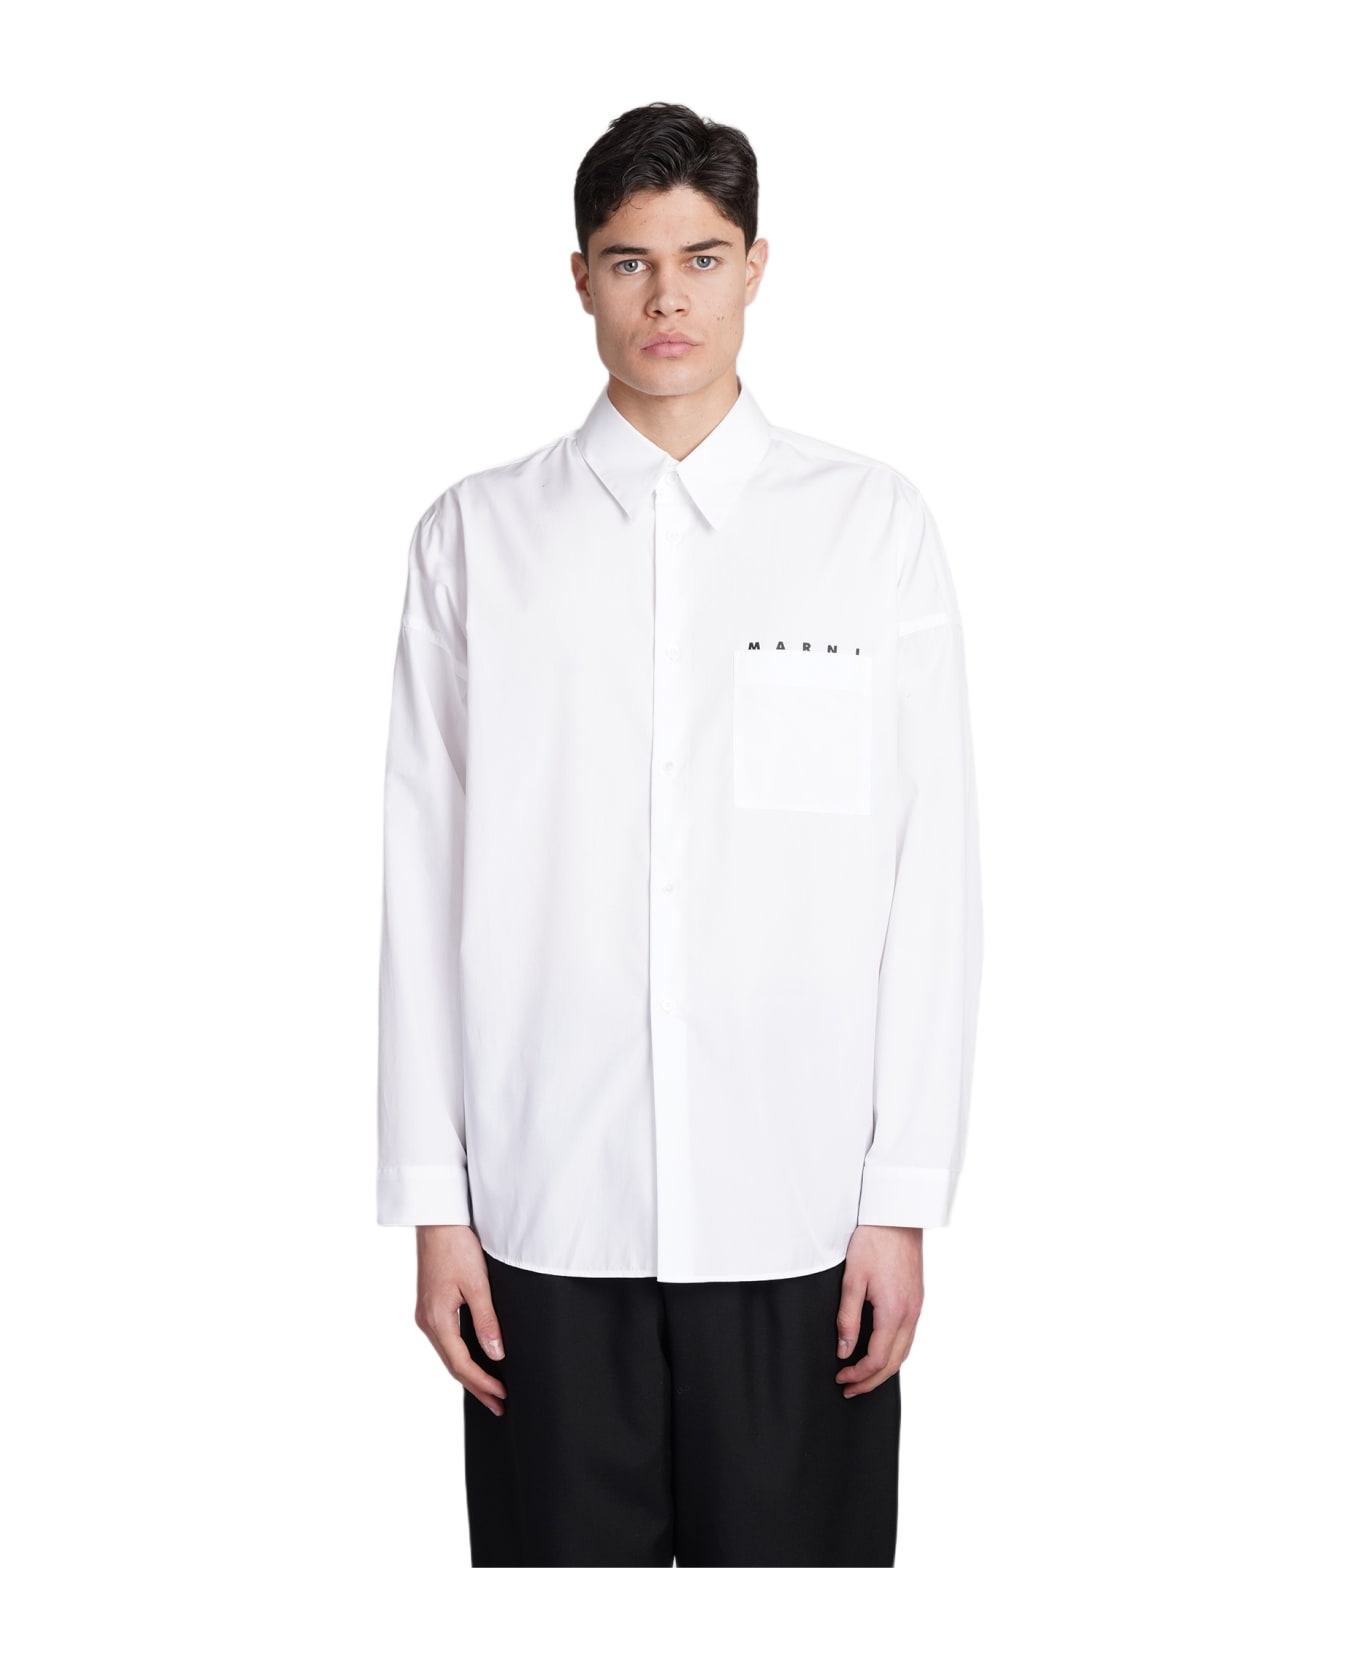 Marni Shirt In White Cotton - Lily White.